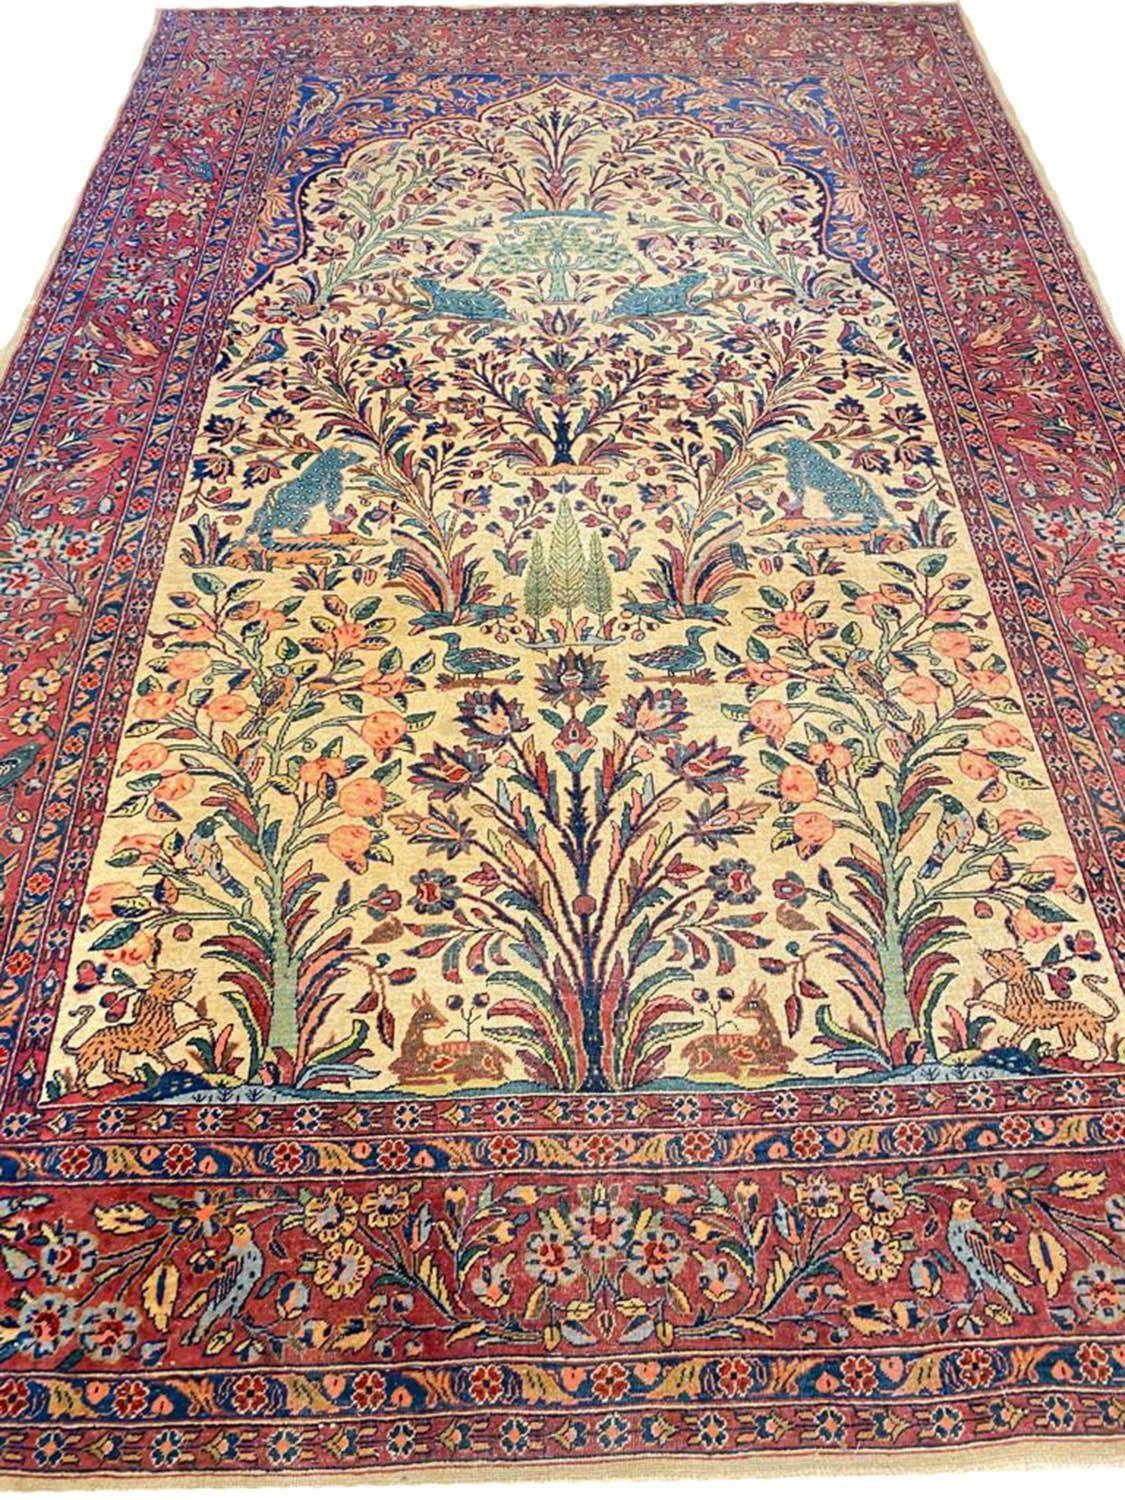 FINE PERSIAN KASHAN RUG, 210cm x 130cm.